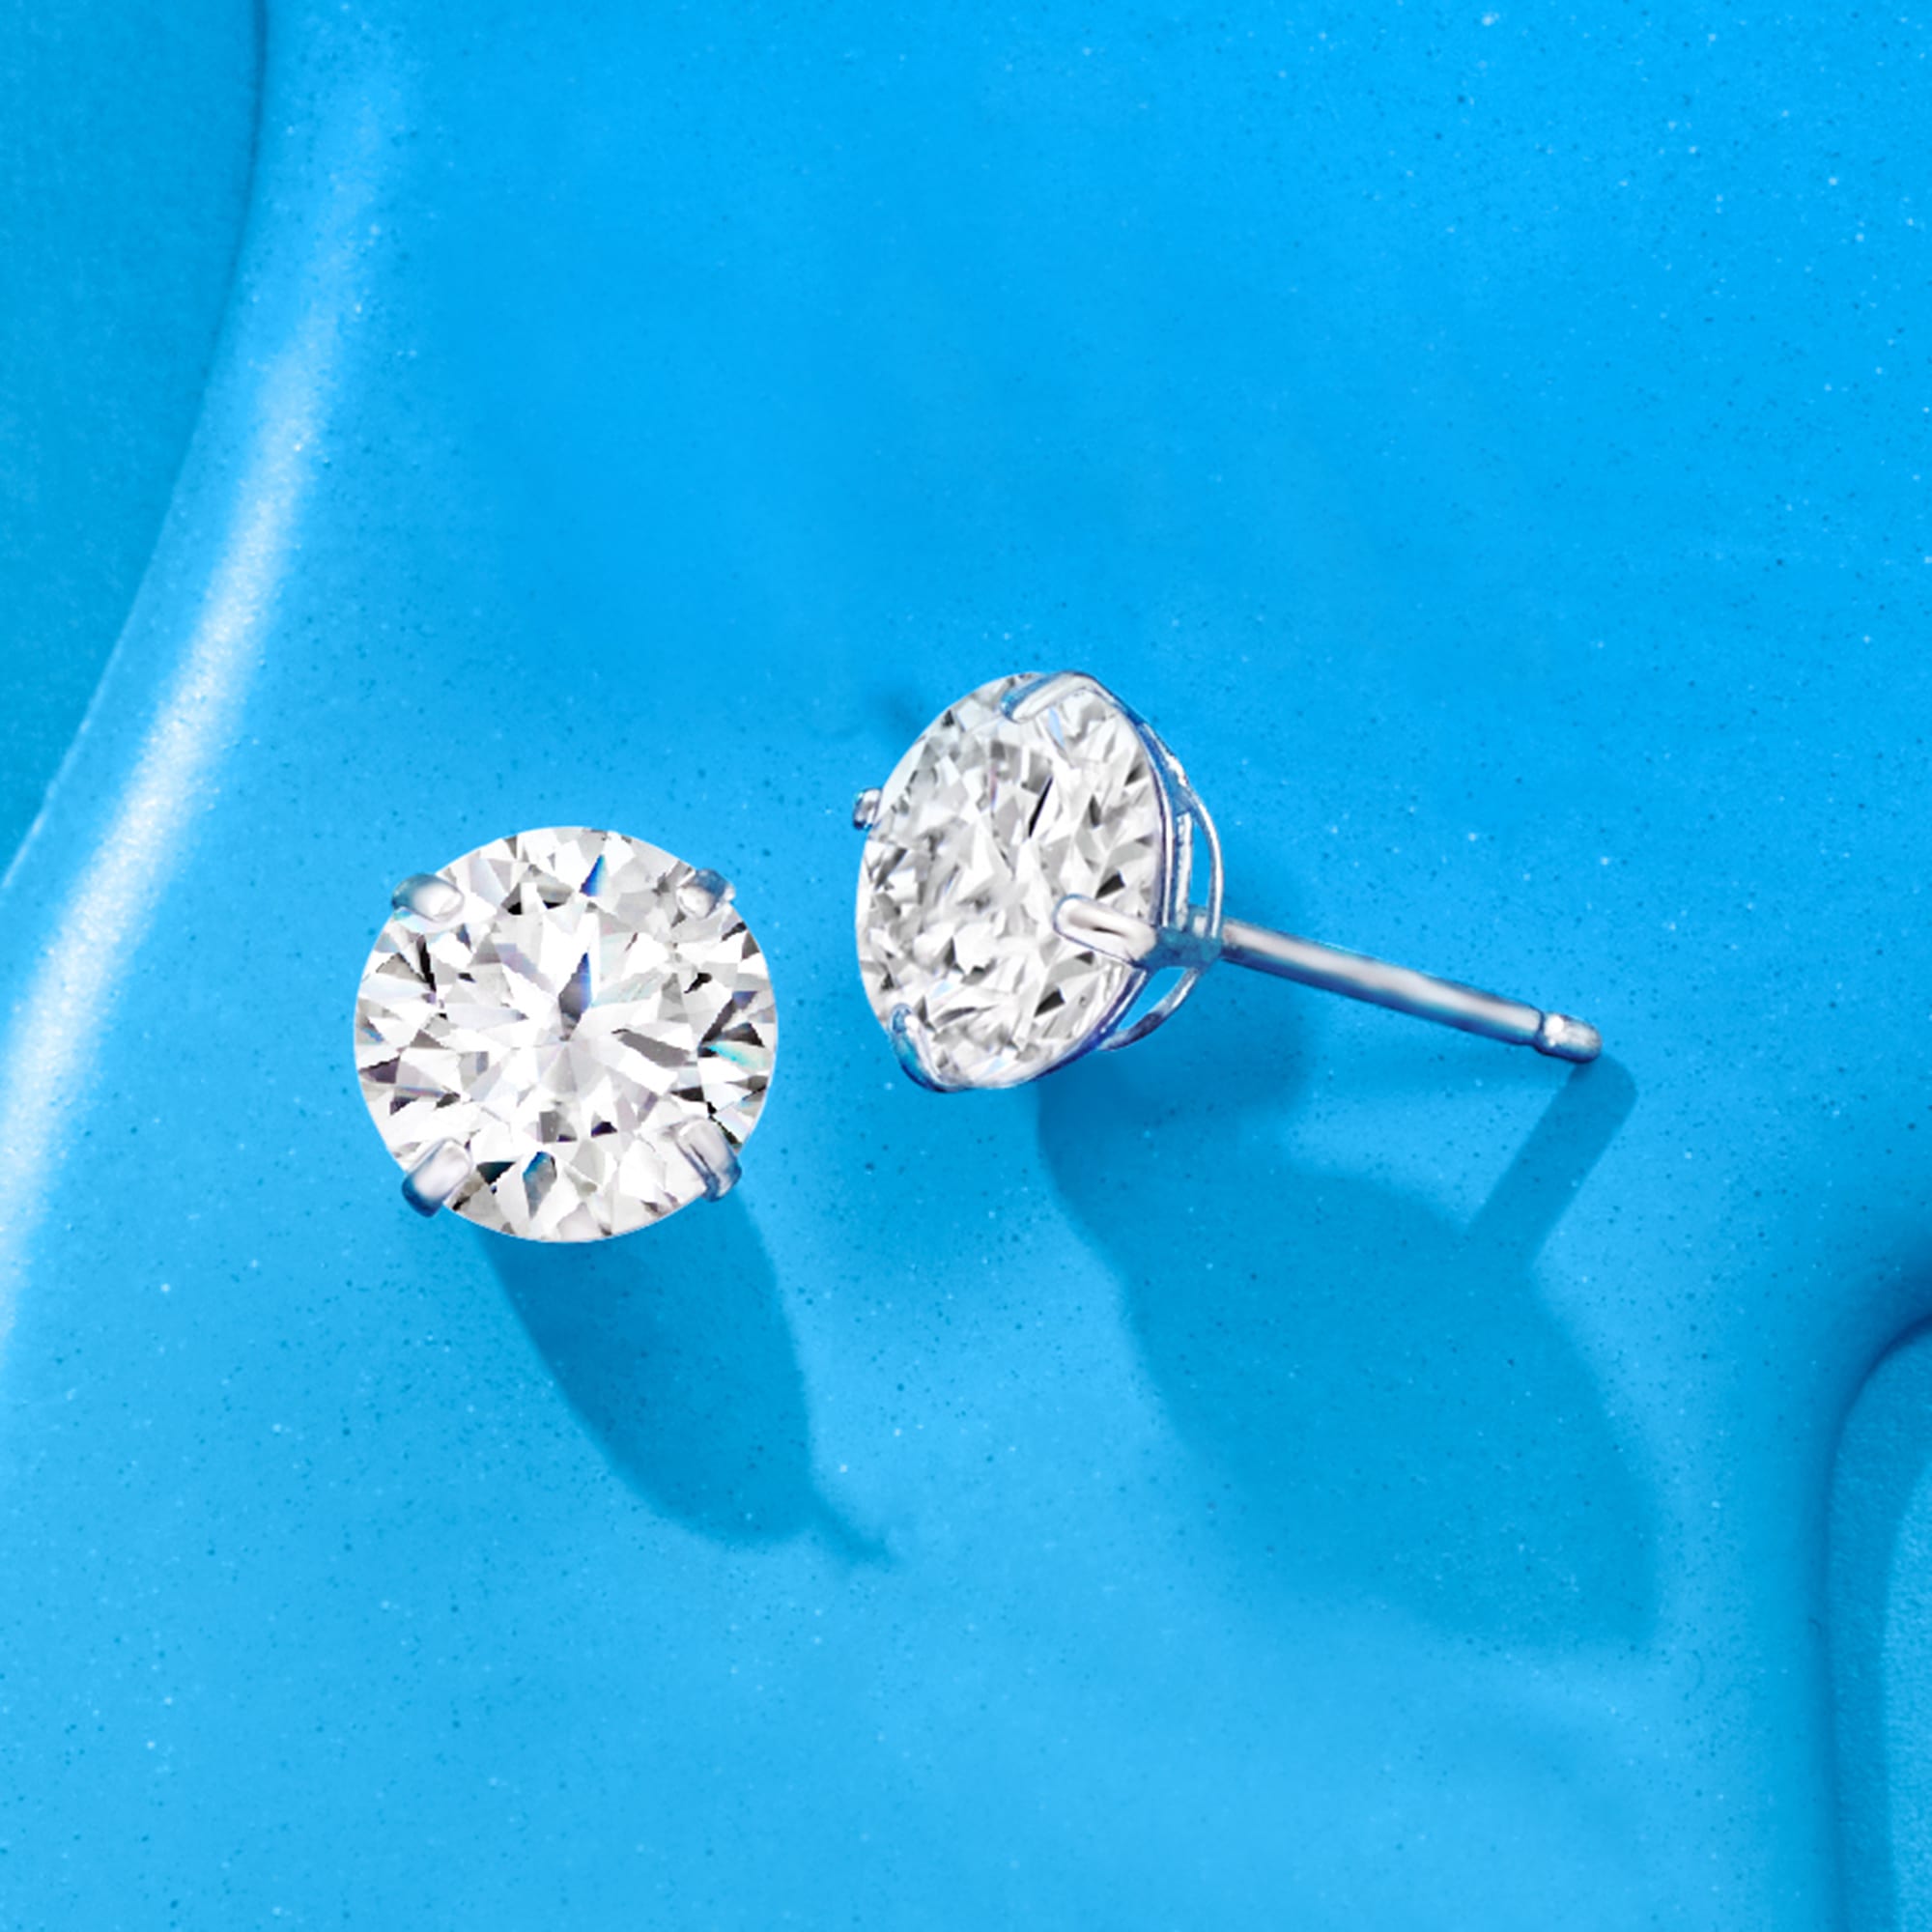 Earring Stud in 18K Gold and Diamonds – Simon G. Jewelry